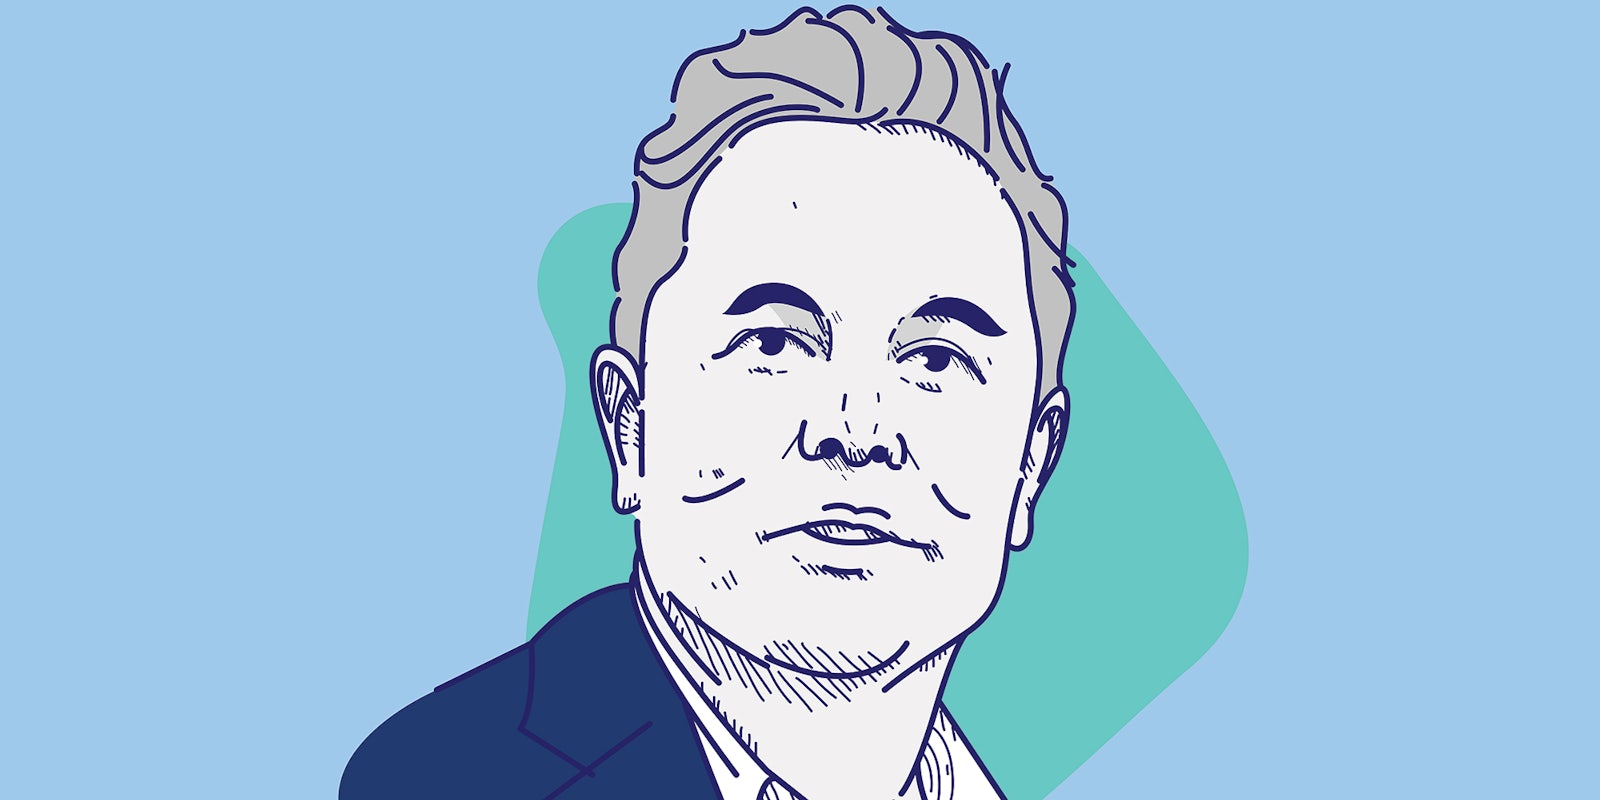 An illustration of Elon Musk.